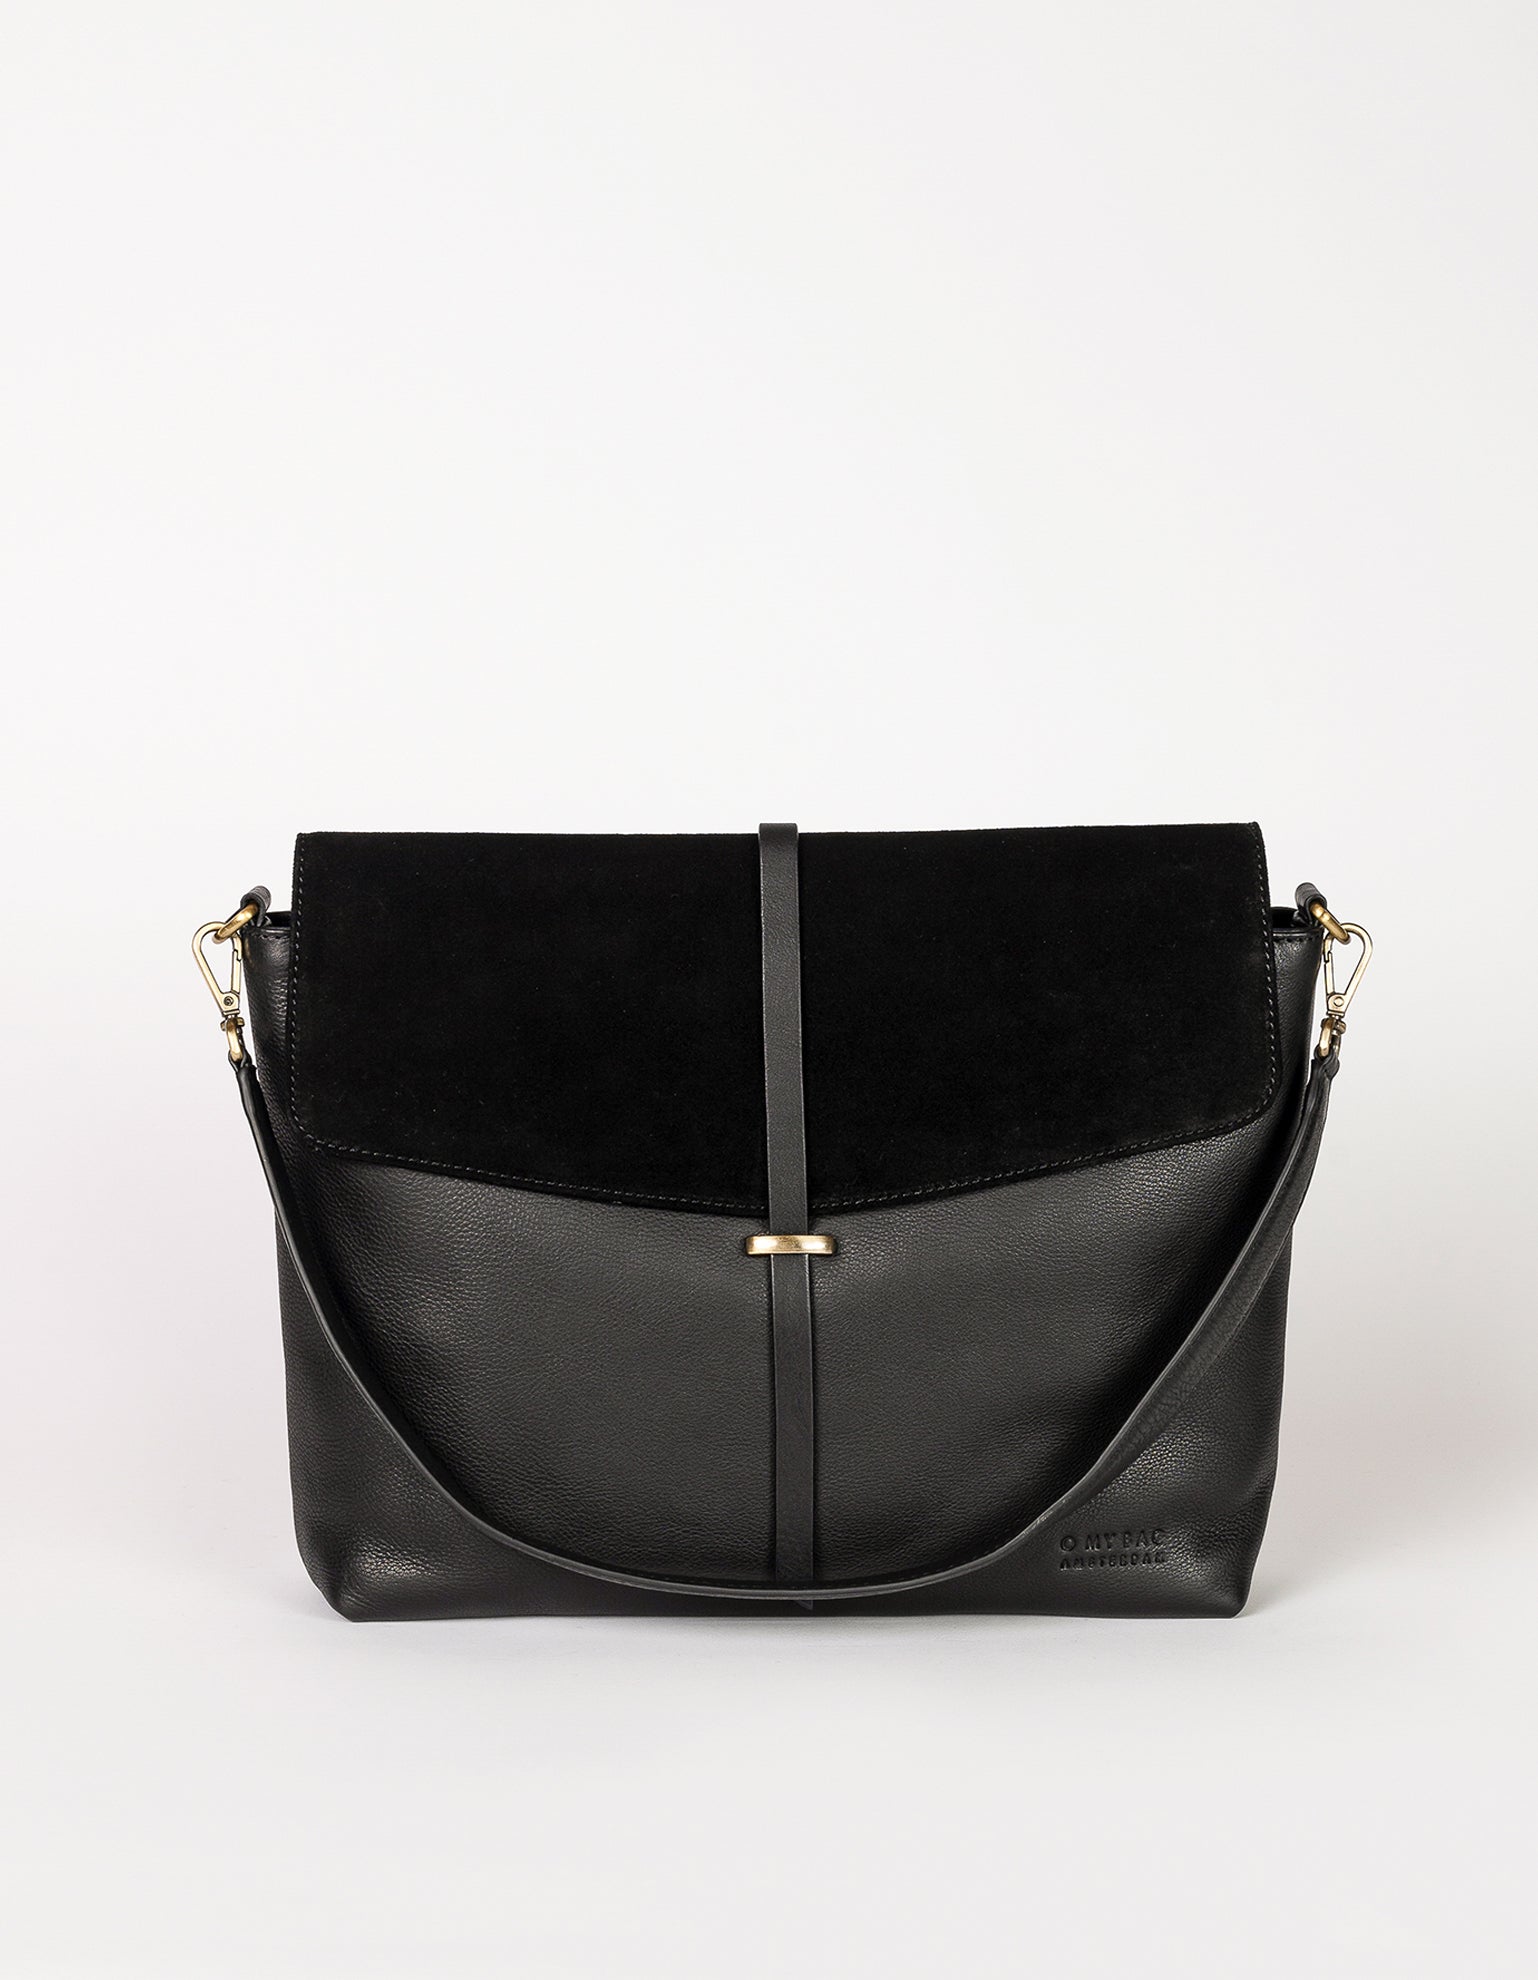 Black Soft Grain & Suede leather womens handbag. Square shape with short adjustable strap. Front product image.